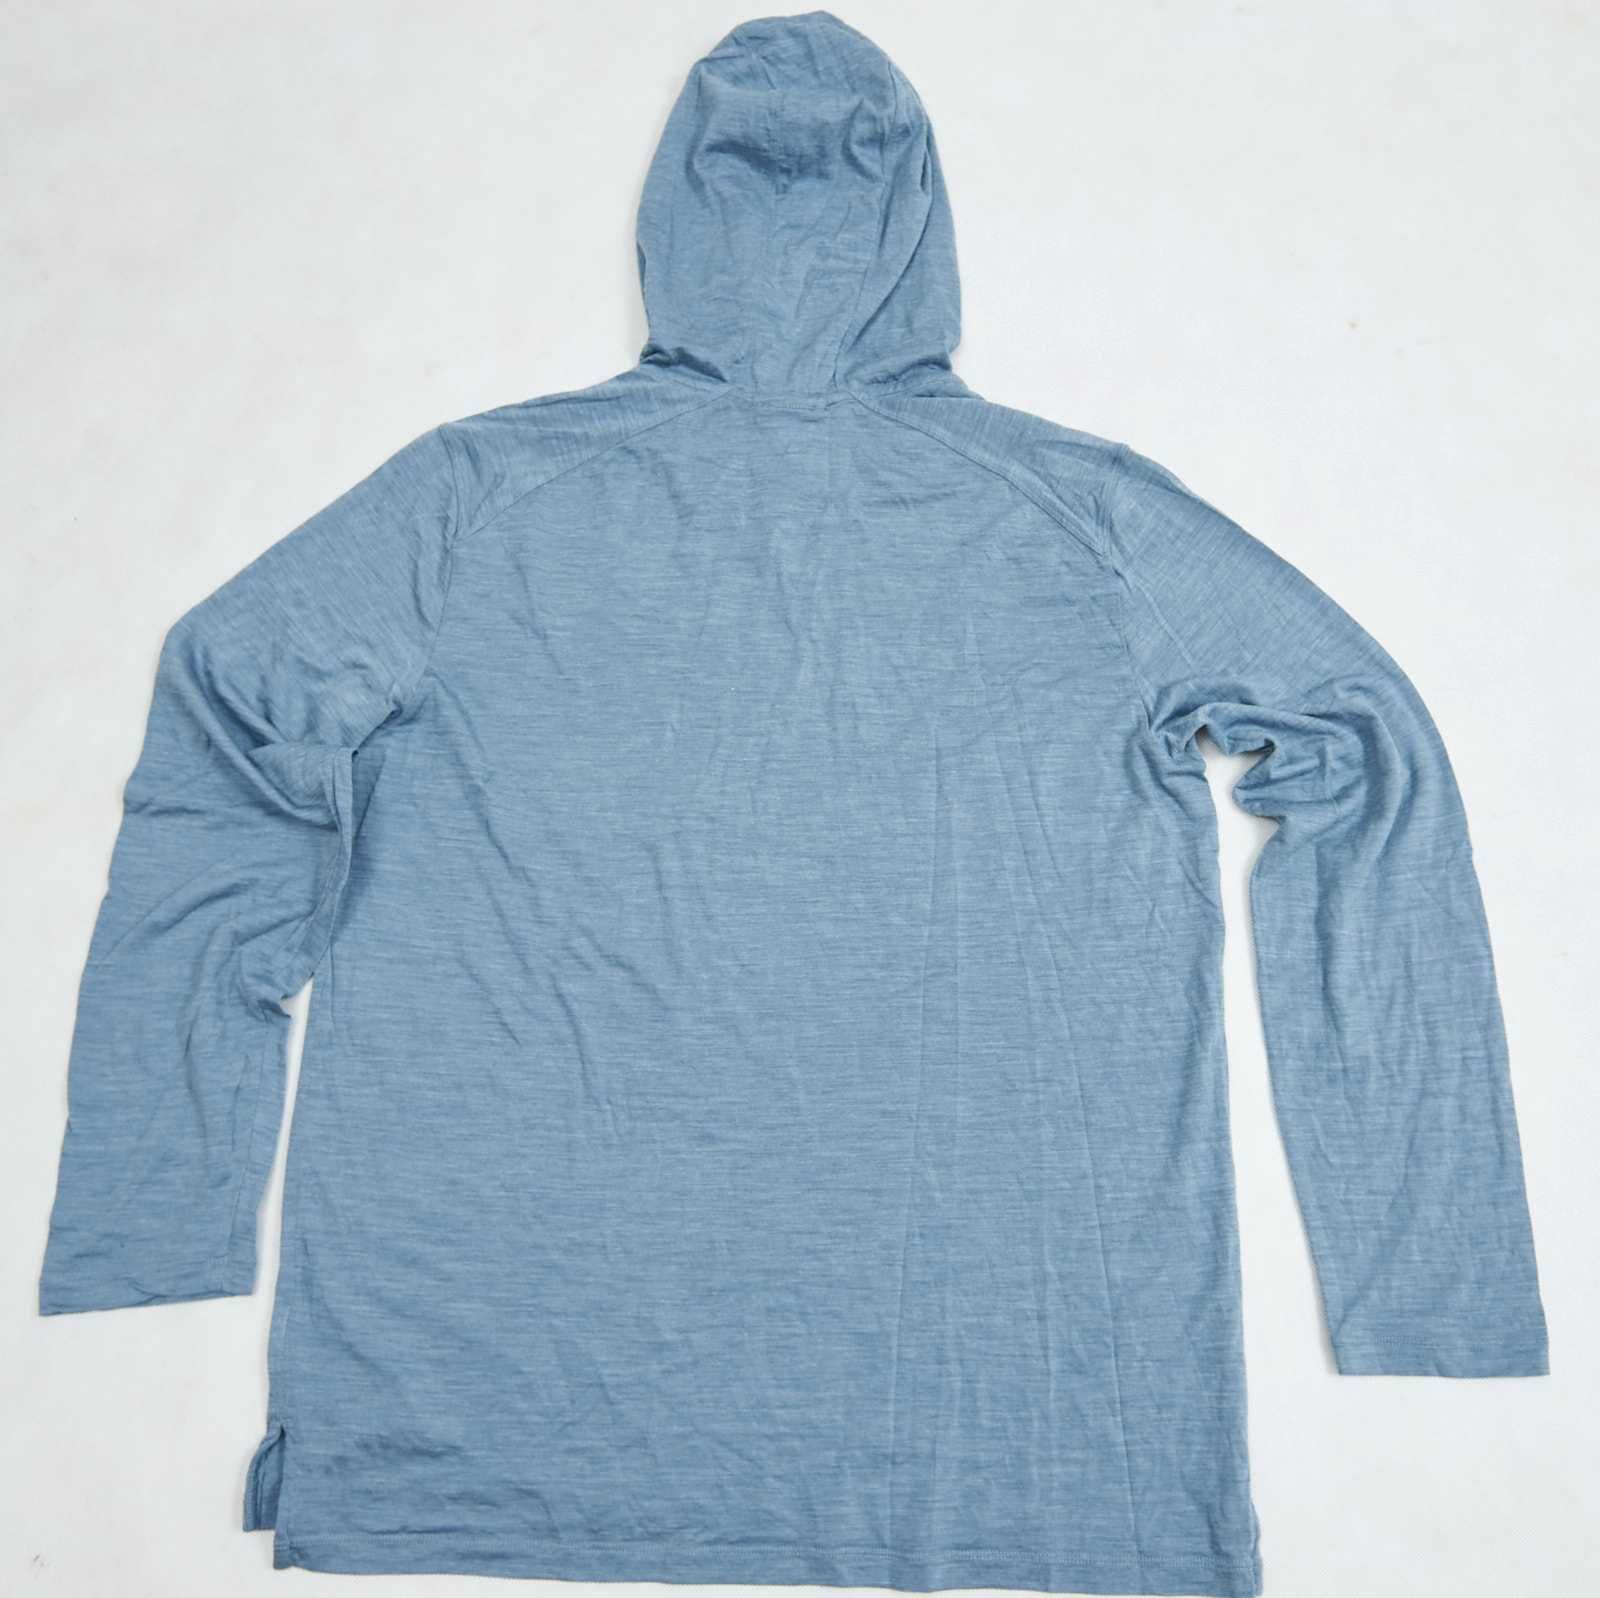 Icebreaker Merino Cool-Lite koszulka Merino Wool size L